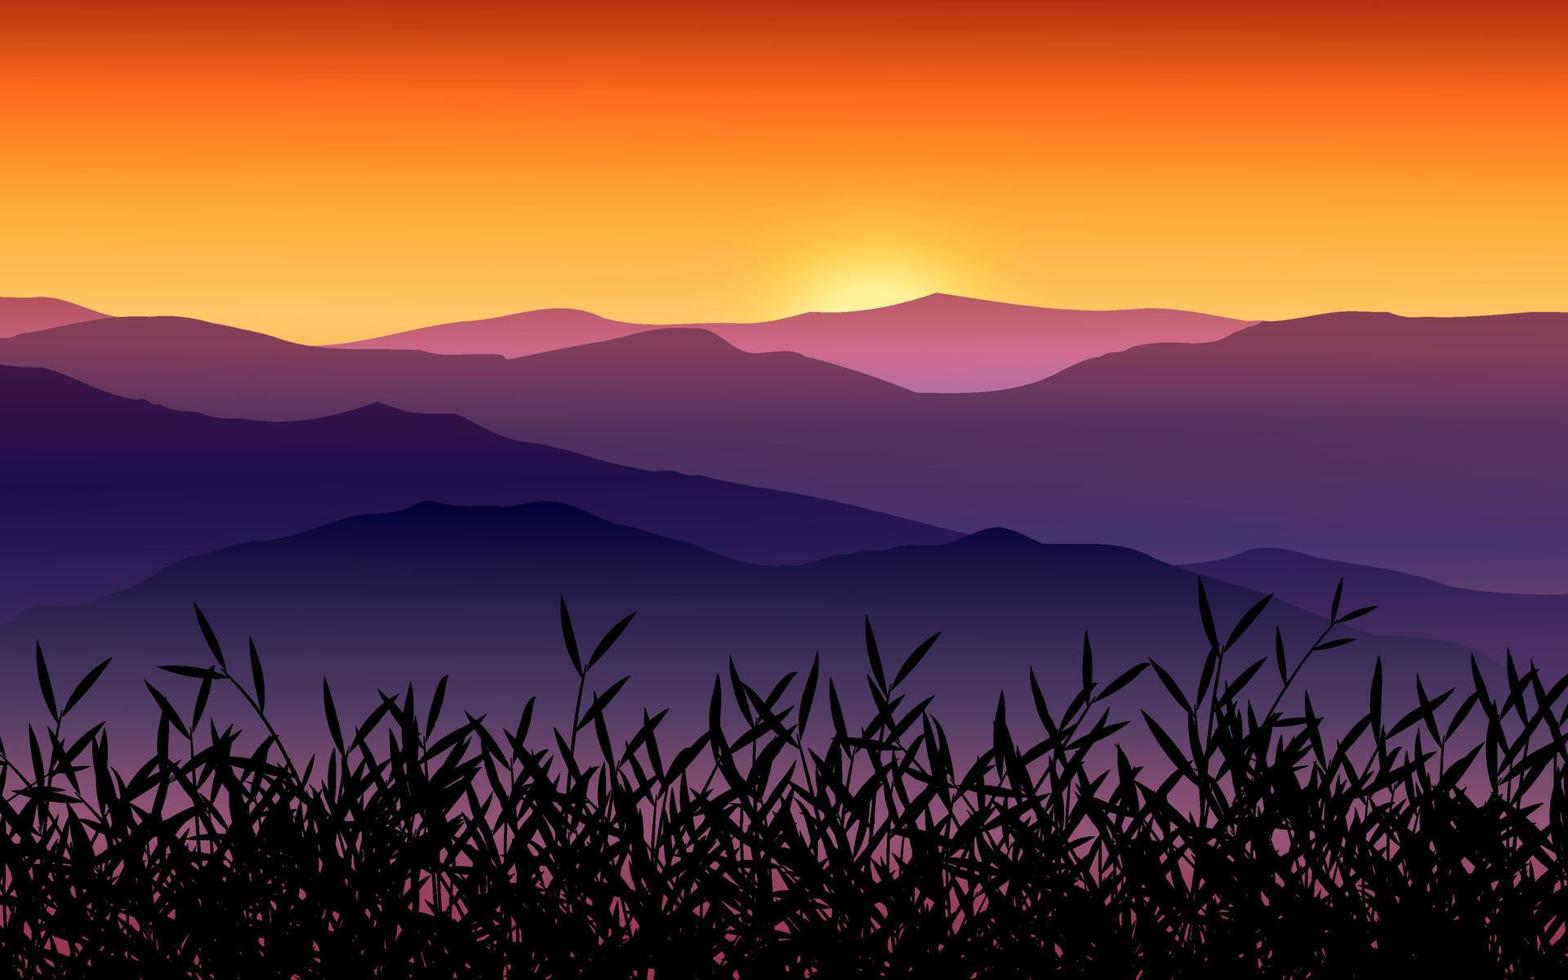 Grassy mountain at sunrise, foggy mountain illustration vector